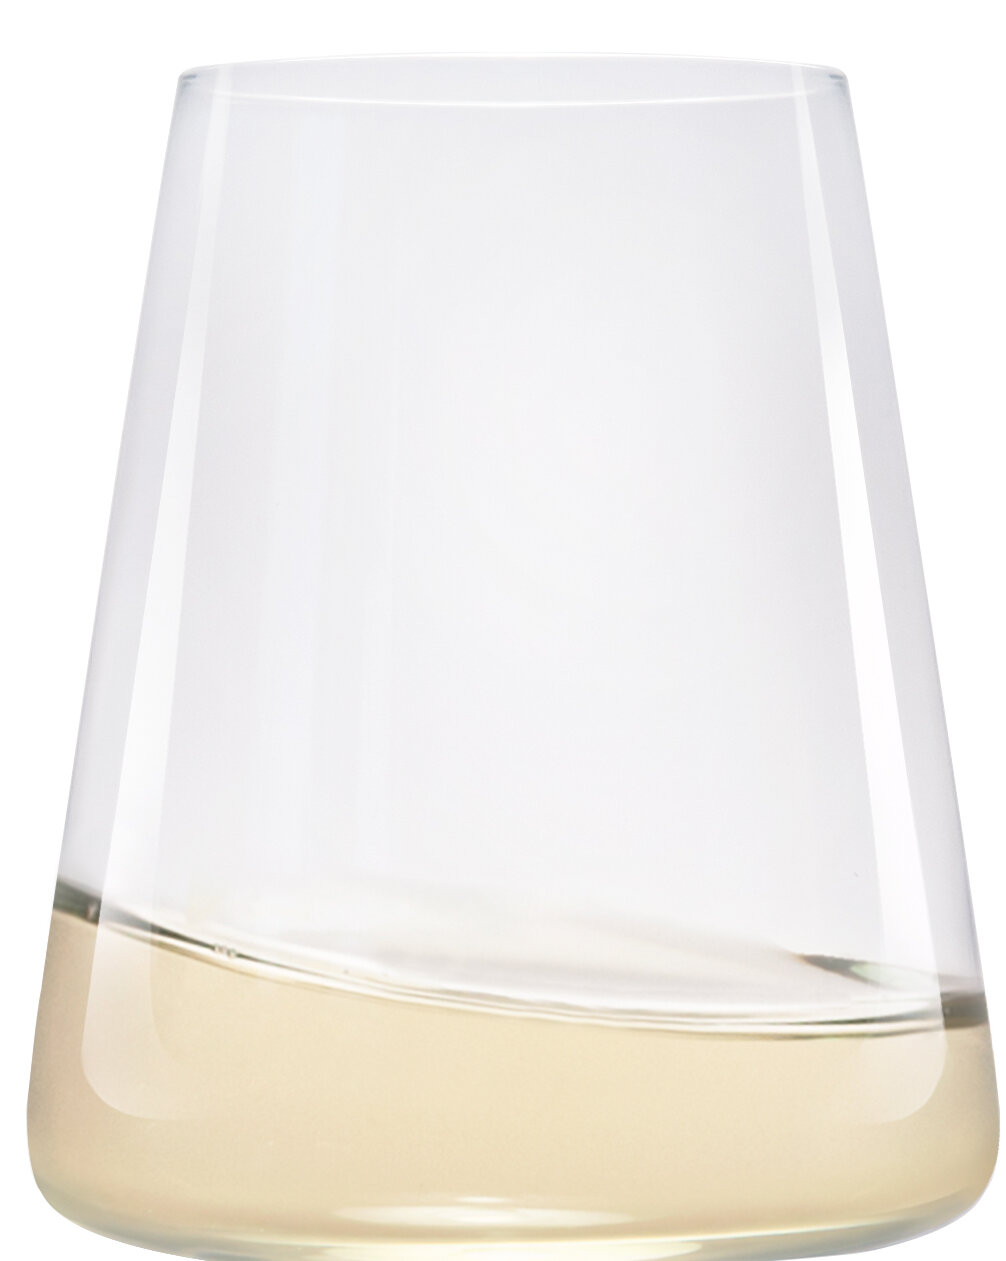 Stolzle 1560003T Celebration White 13 Oz. Wine Glass - 24 / CS